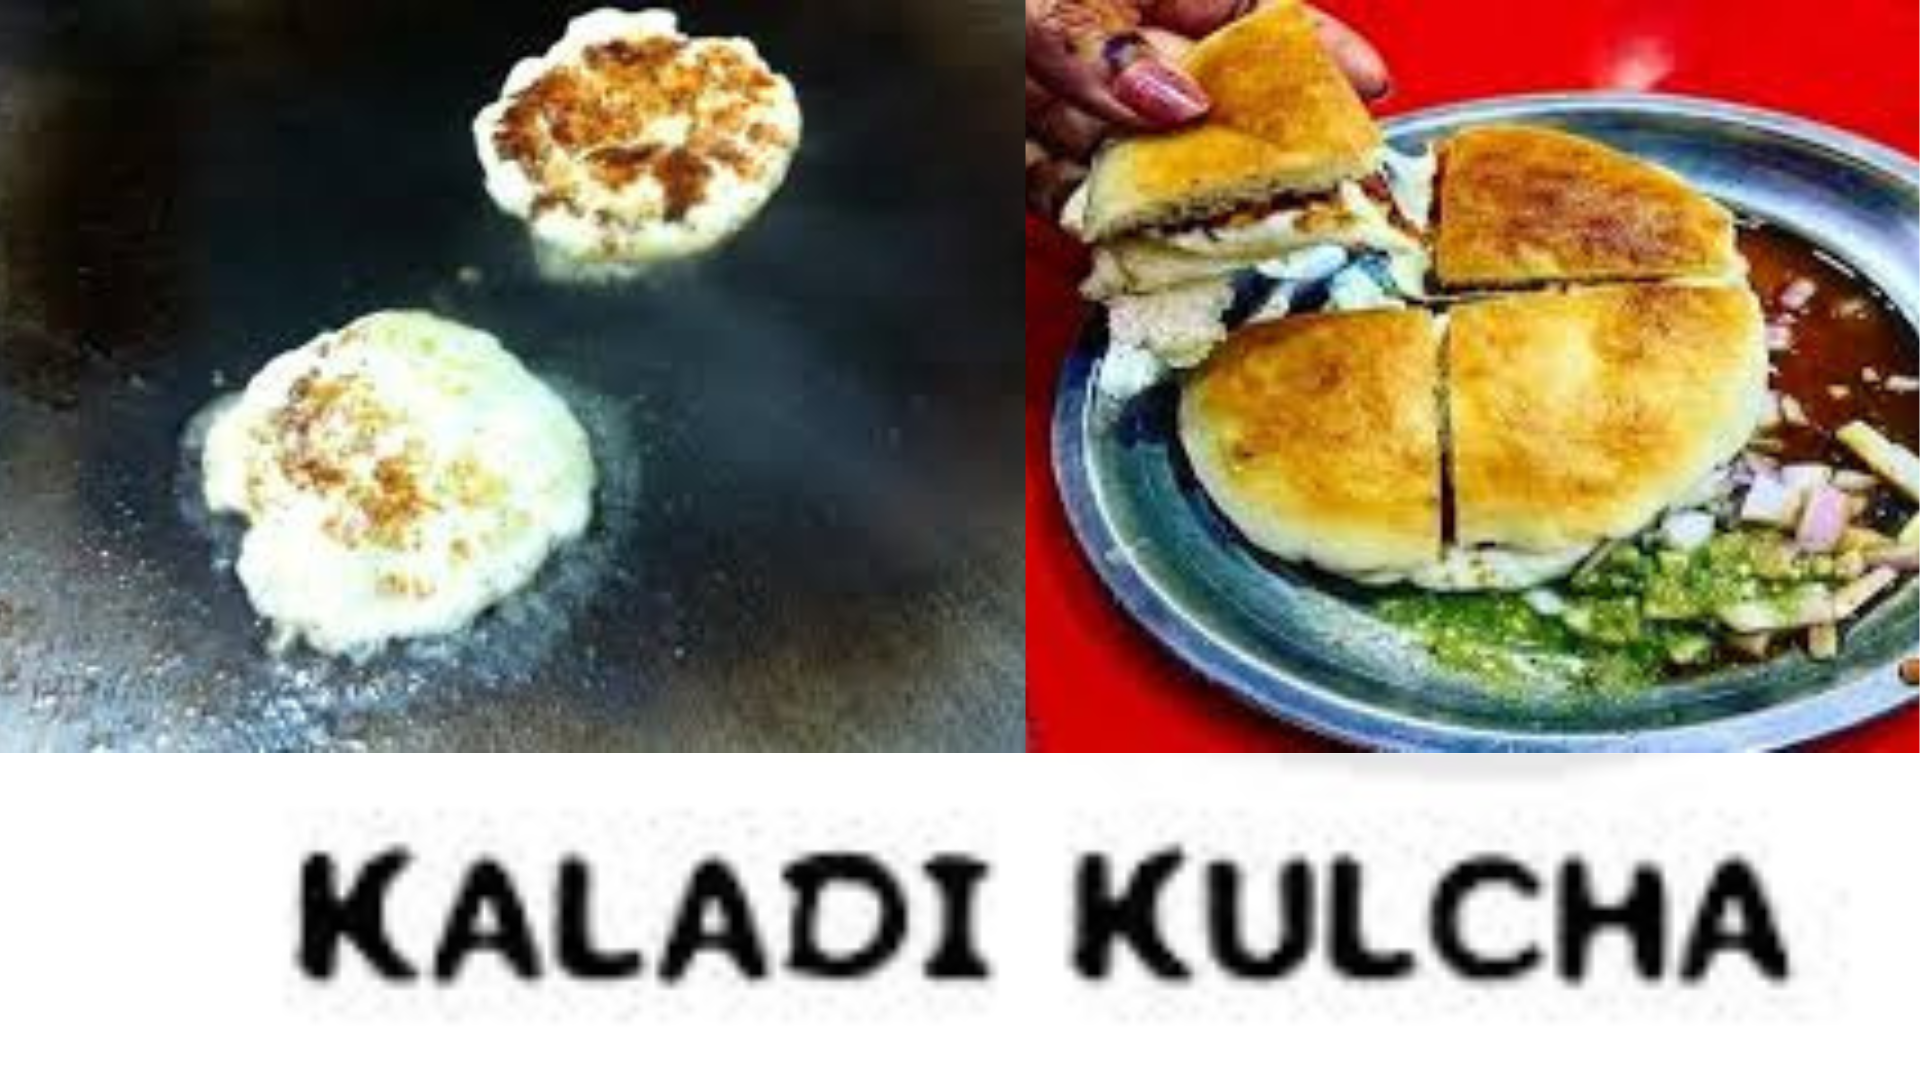 Jammu’s Kaladi Kulcha: A ‘Cheese Lover’s Dream’ According To US Vlogger